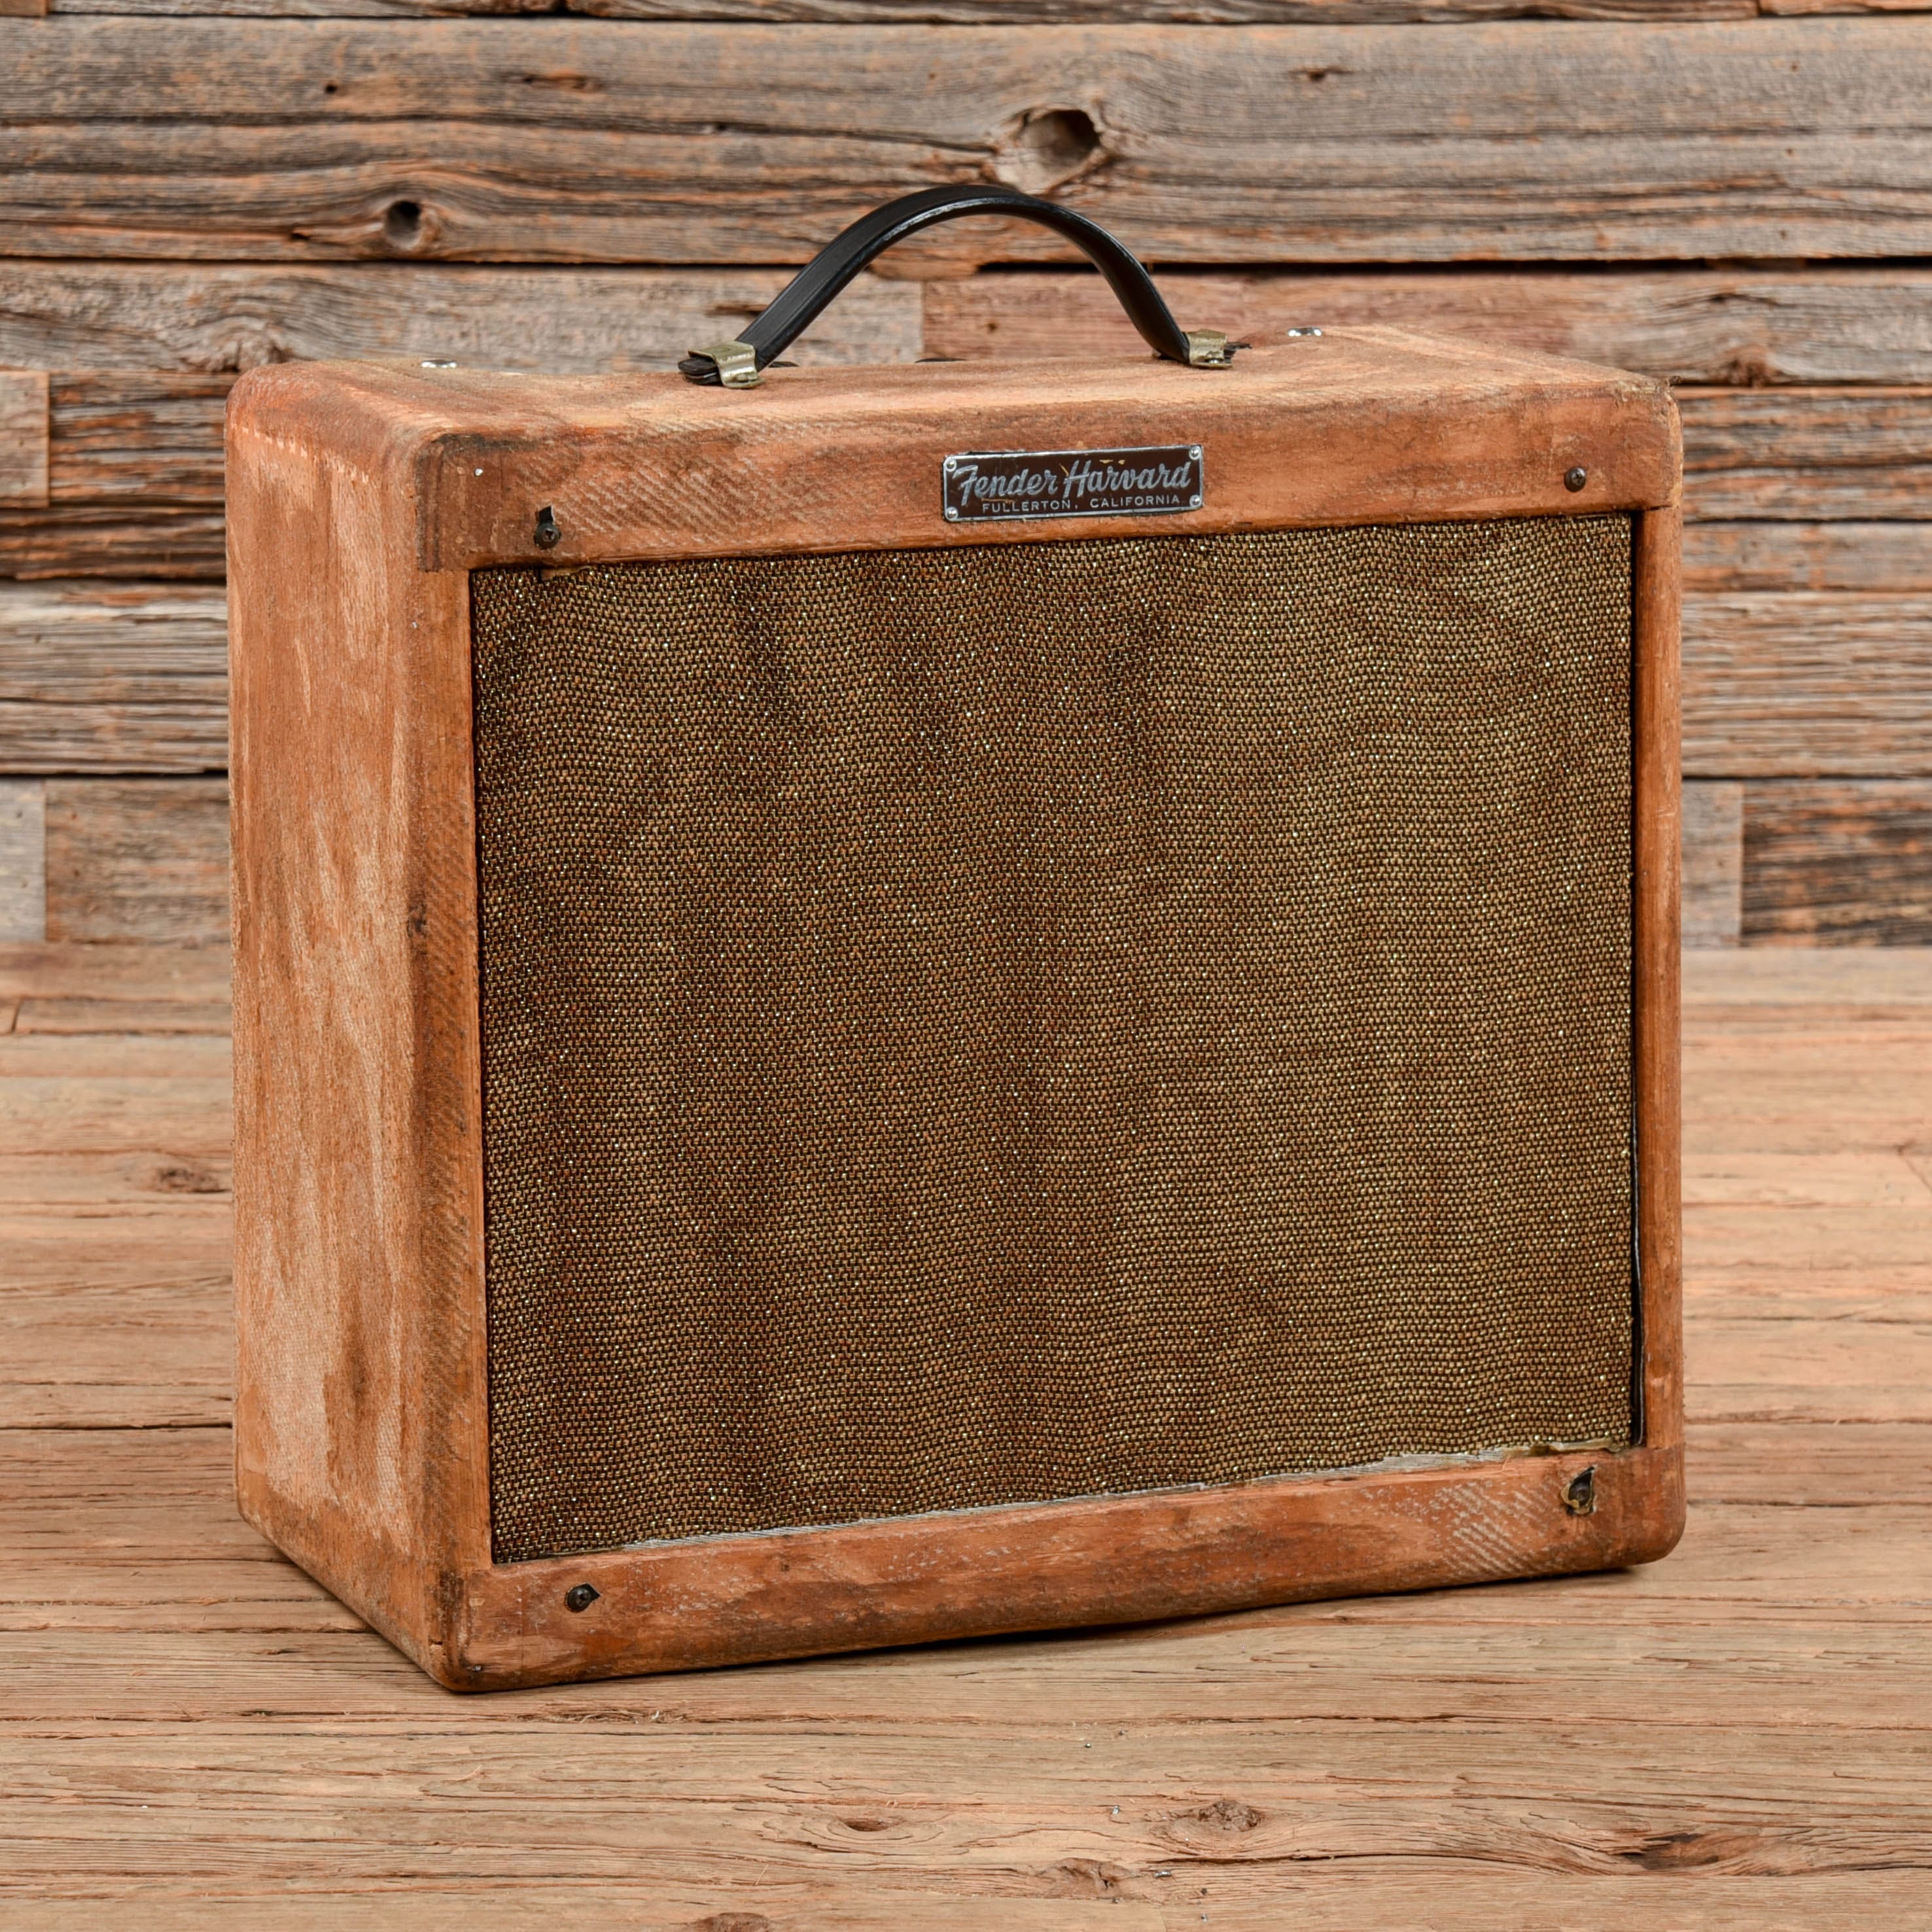 Fender Harvard Amp  1957 Amps / Guitar Cabinets